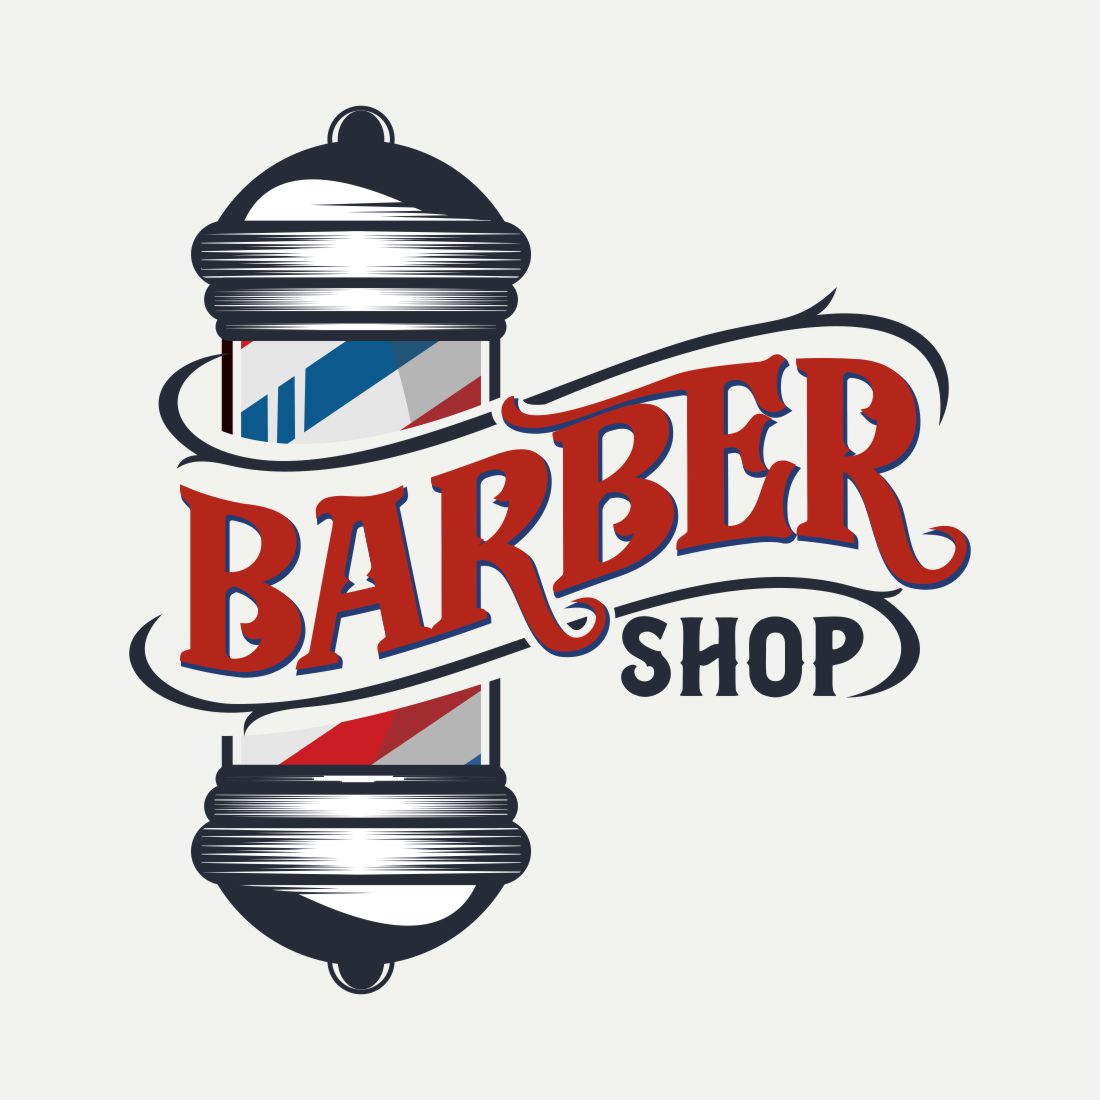 Vintage barber shop Logo, haircut salon retro design, Old hairdresser badge with barber pole, scissors, razor blade vector preview image.